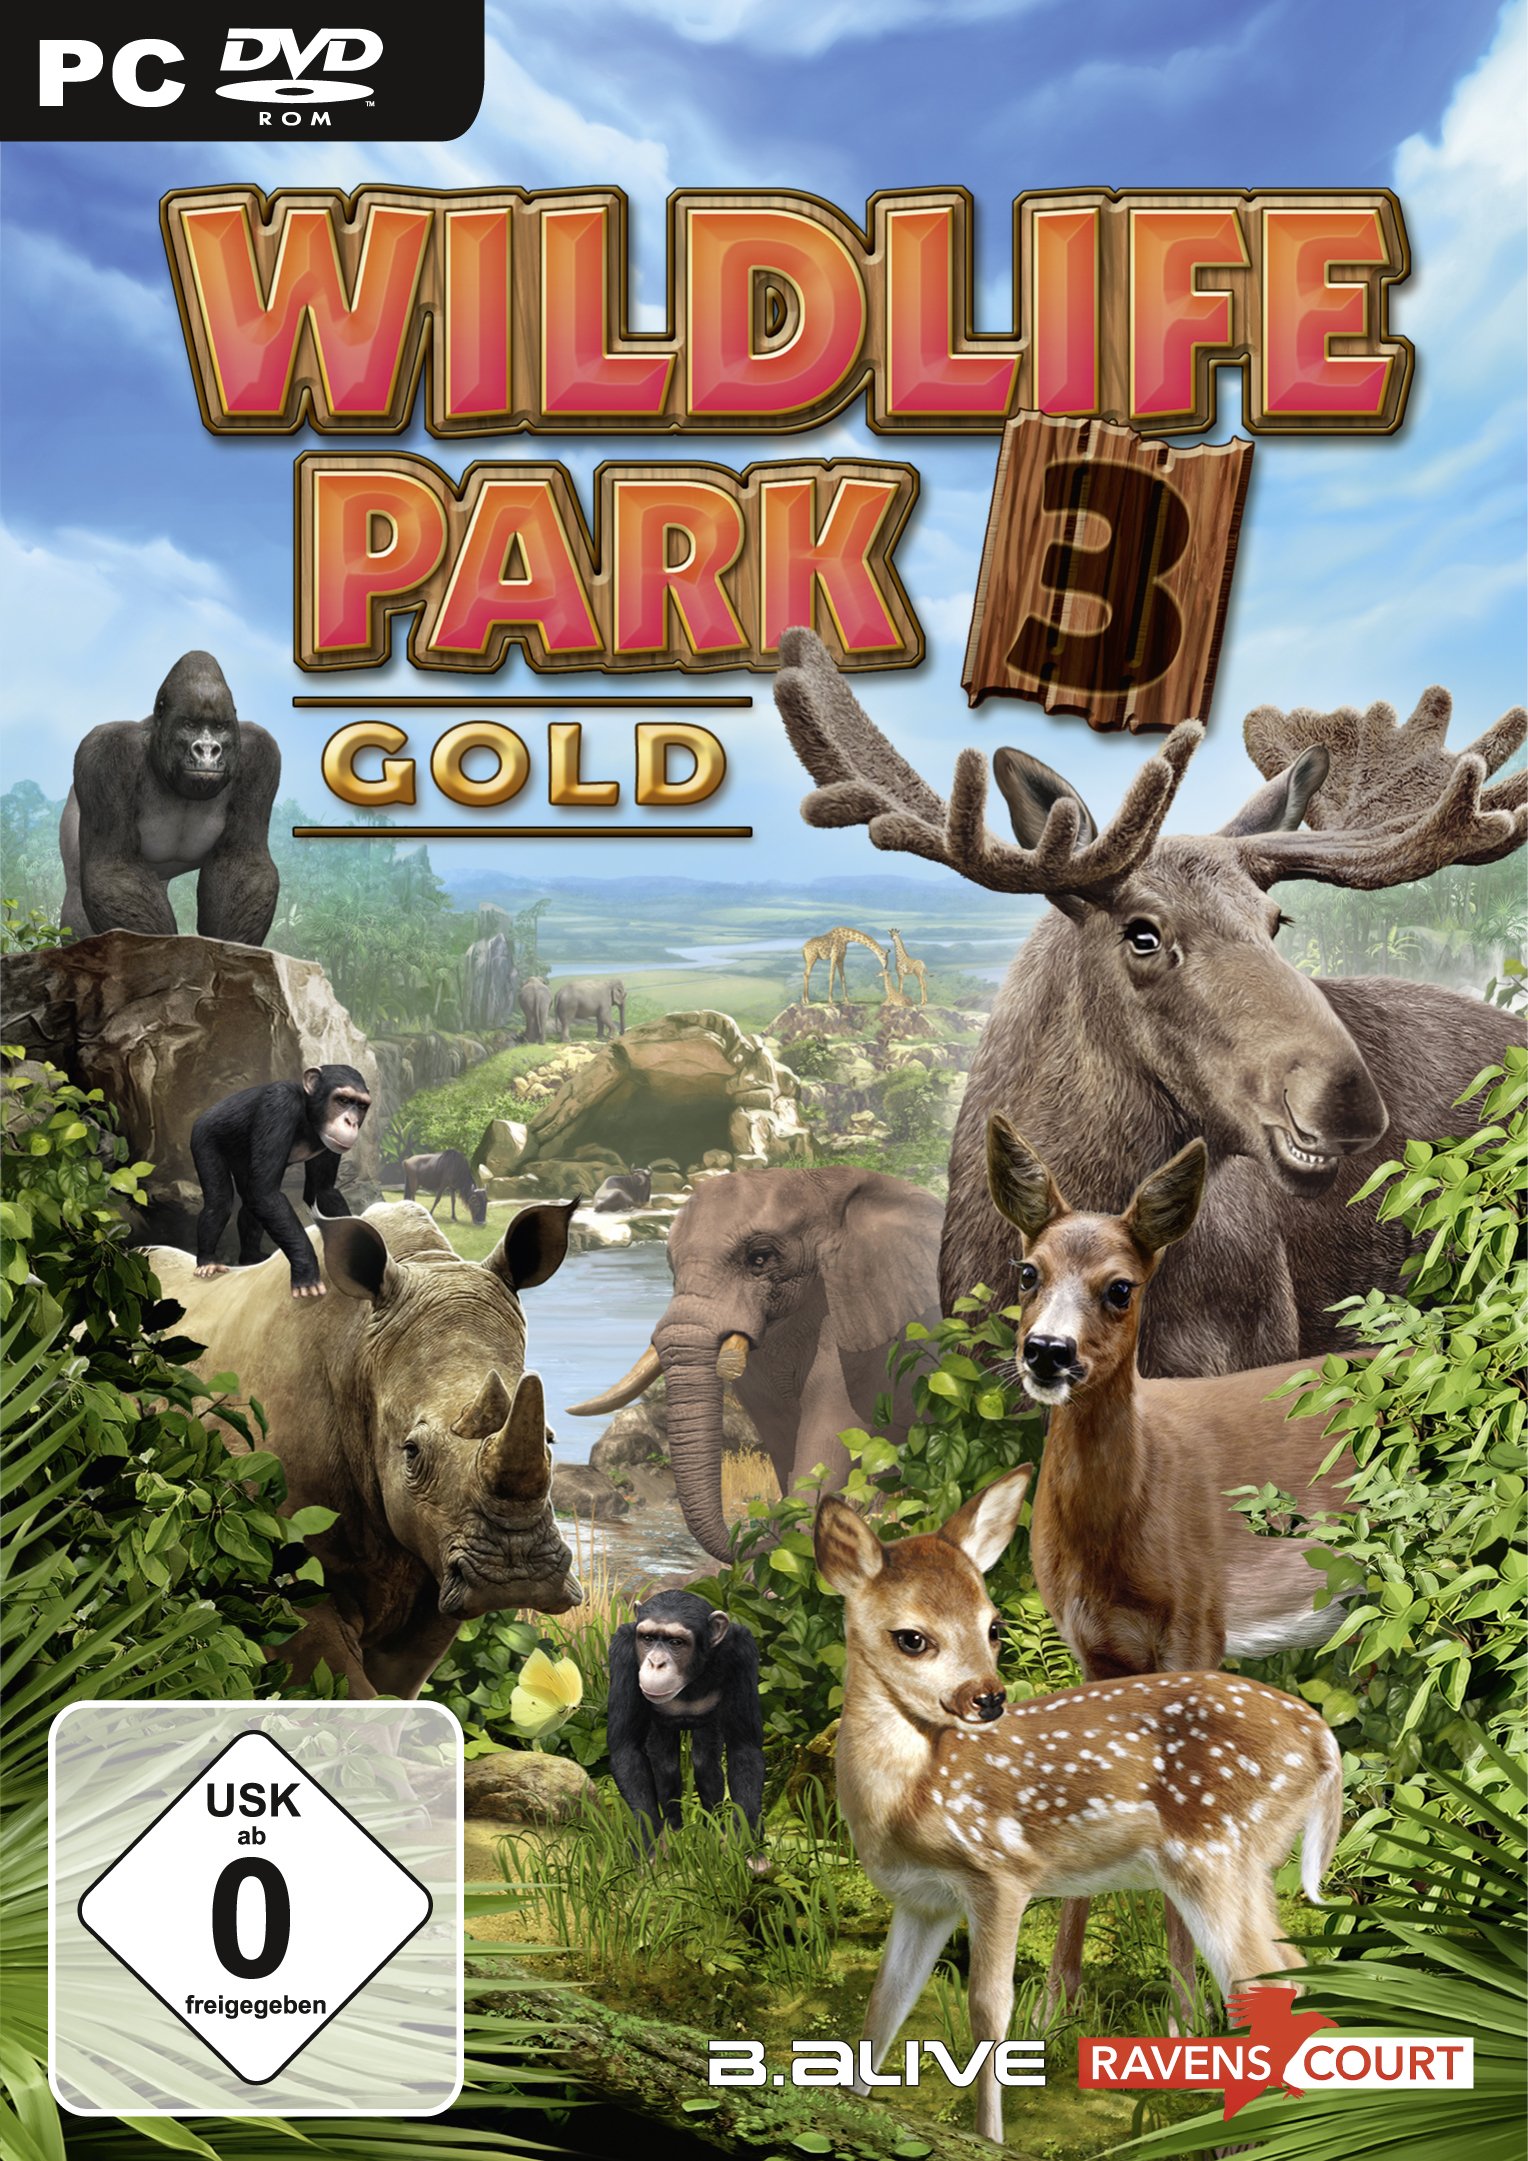 wildlife park 3 completo